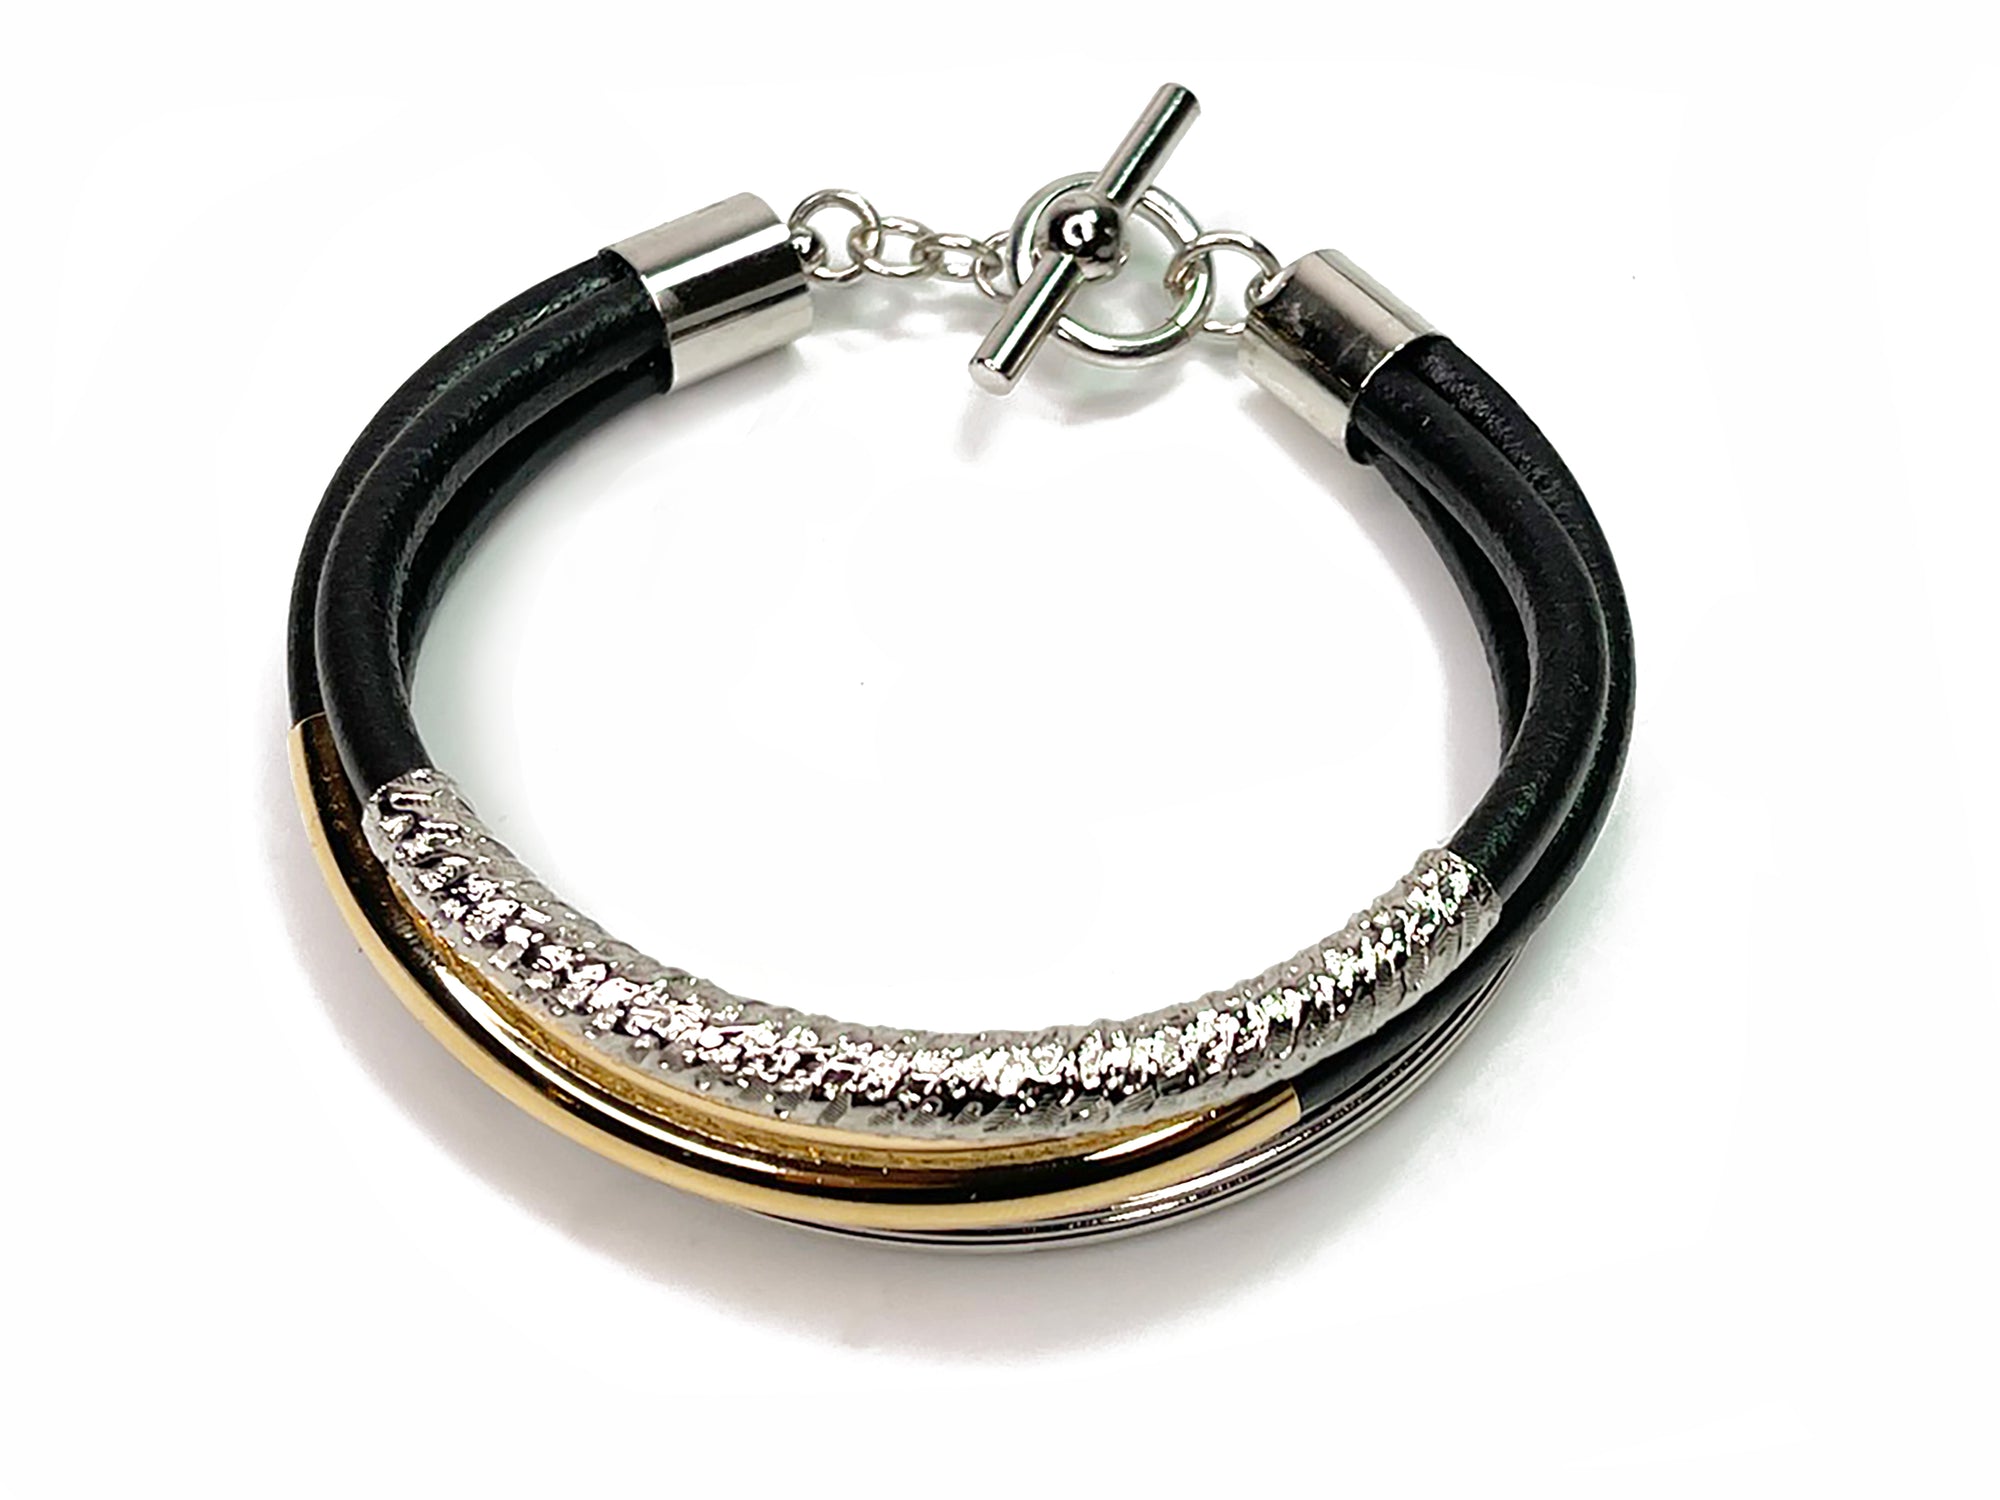 Black Leather Three-Strand Bracelet with Textured Metal Tubes